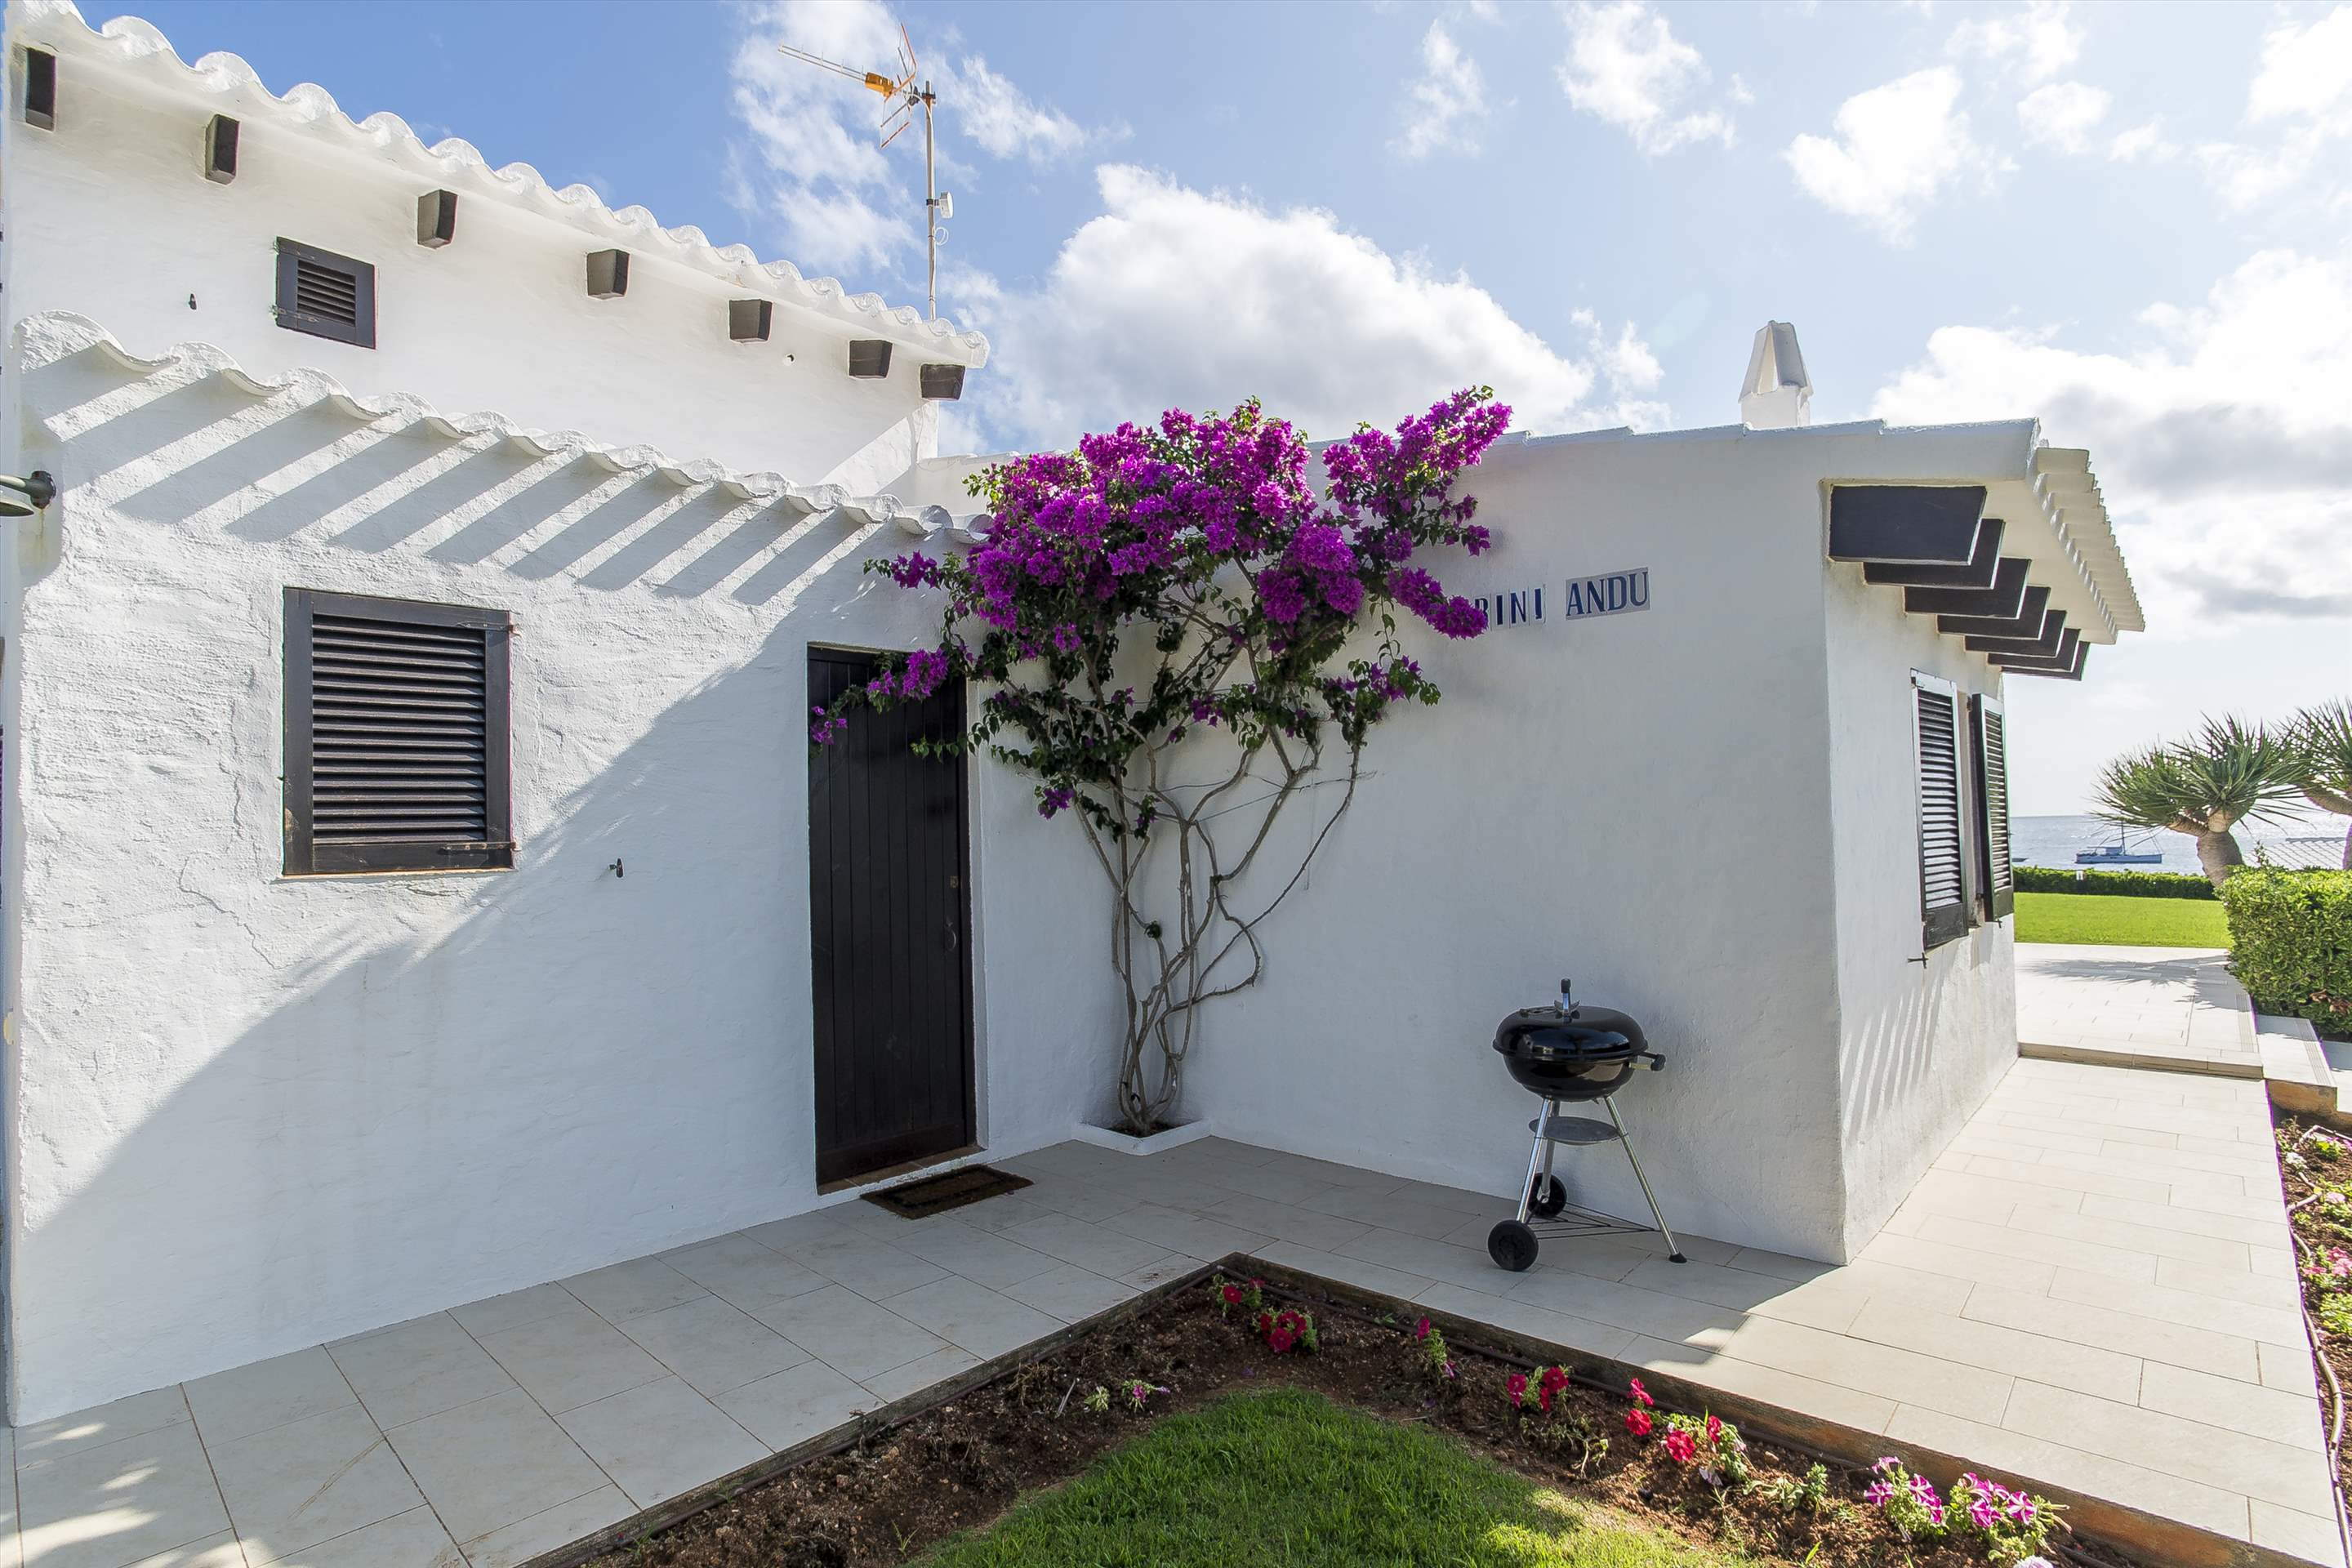 Villa Bini Andu, 3 bedroom villa in Mahon, San Luis & South East, Menorca Photo #12